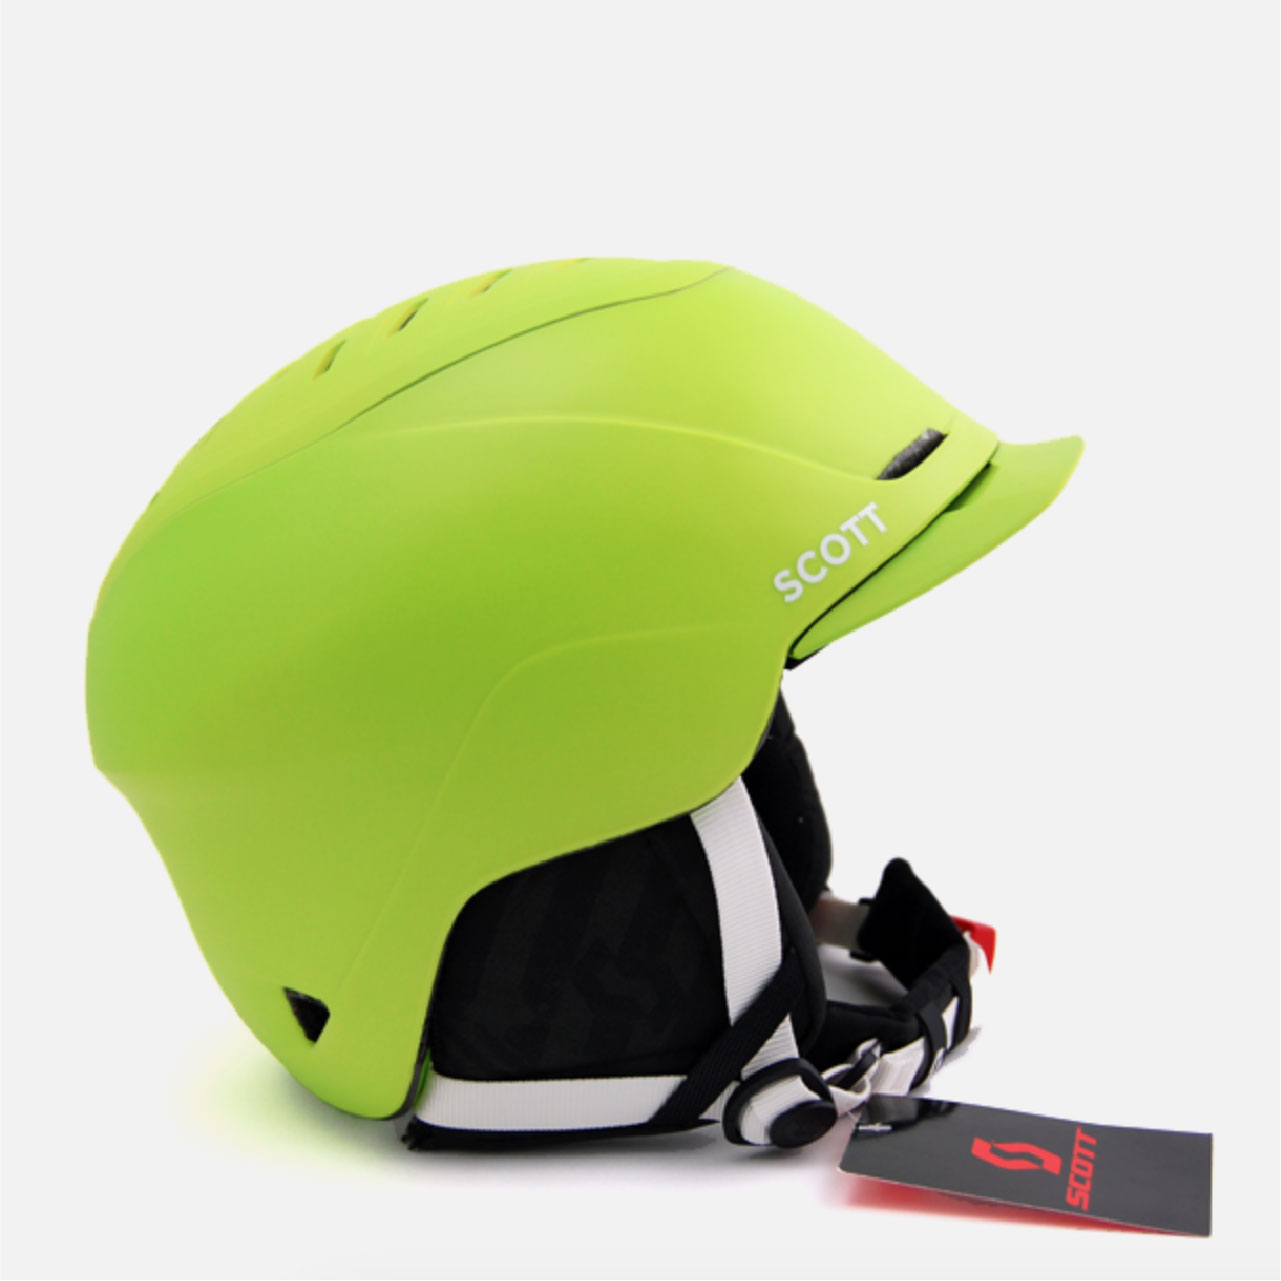 Scott’s Sports Roam Winter Helmet | Final Product